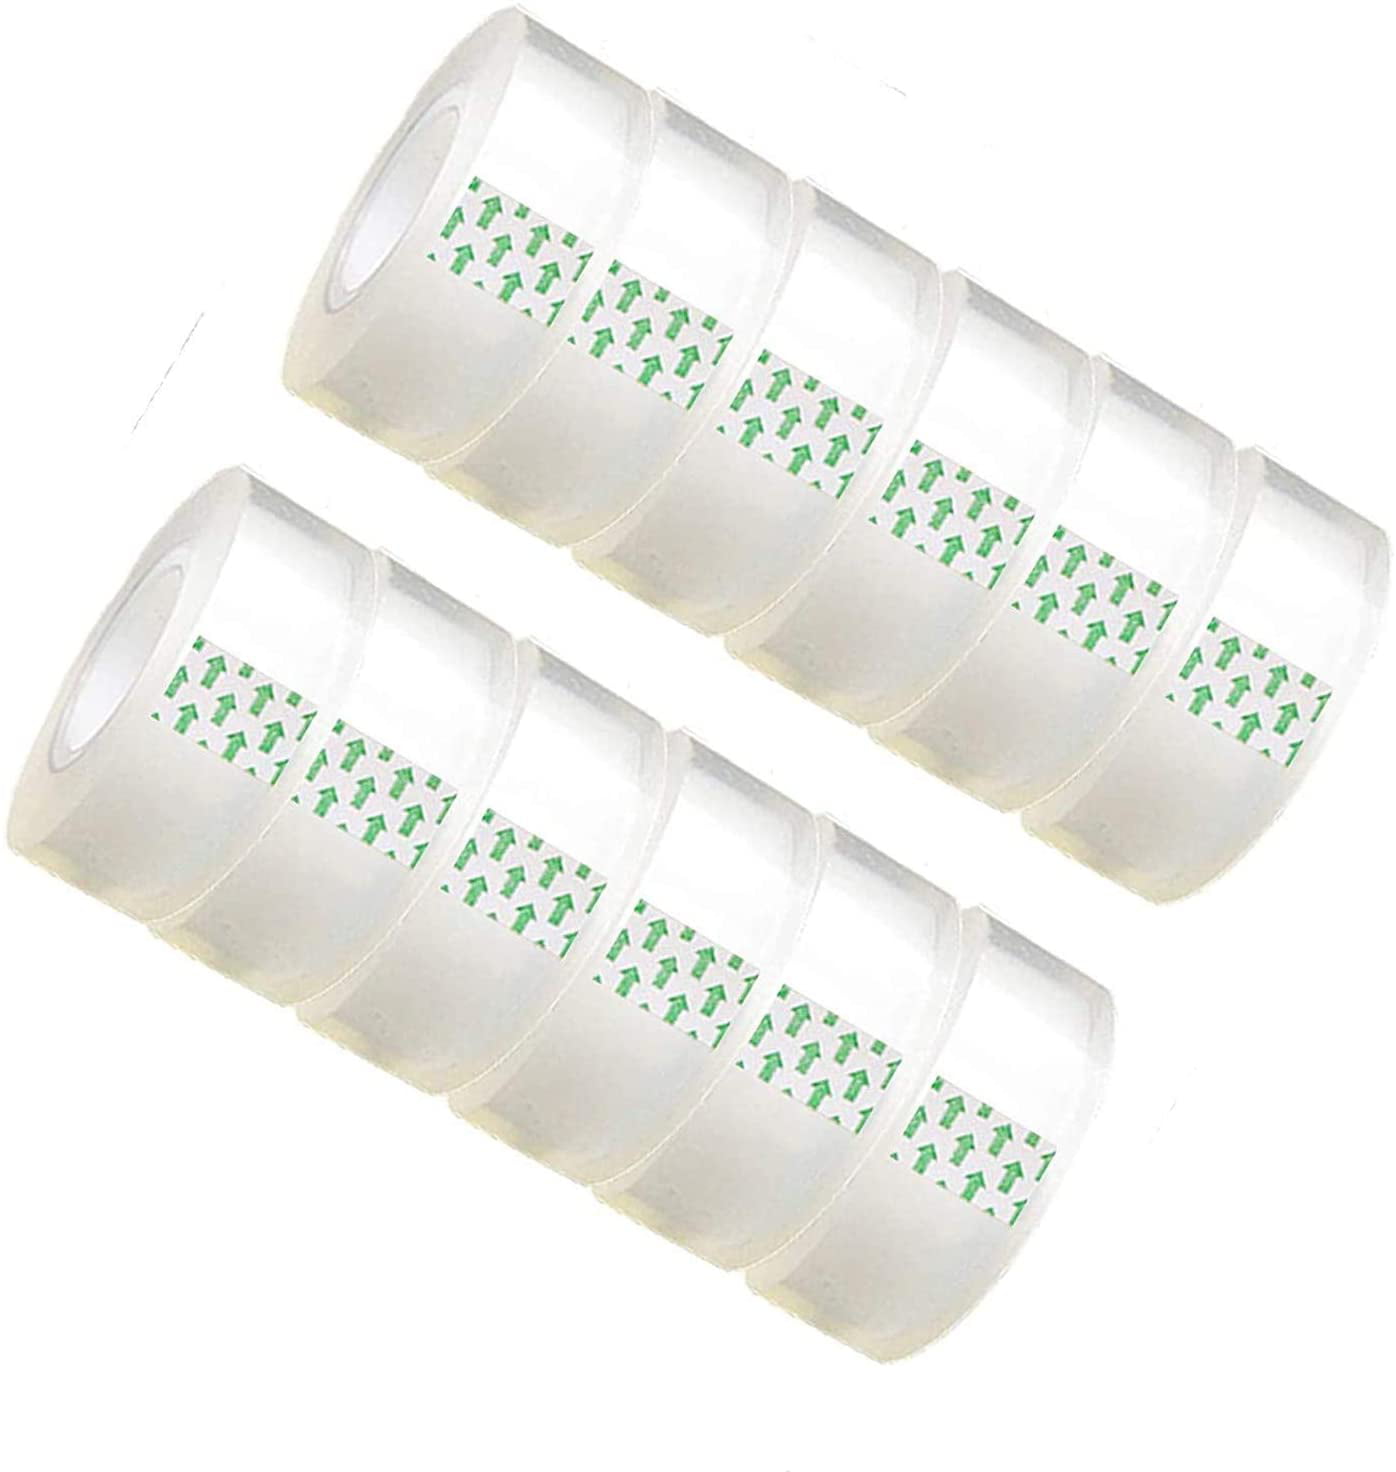 Transparent Tape Refills for Dispenser 12 Rolls 3/4 Inches 